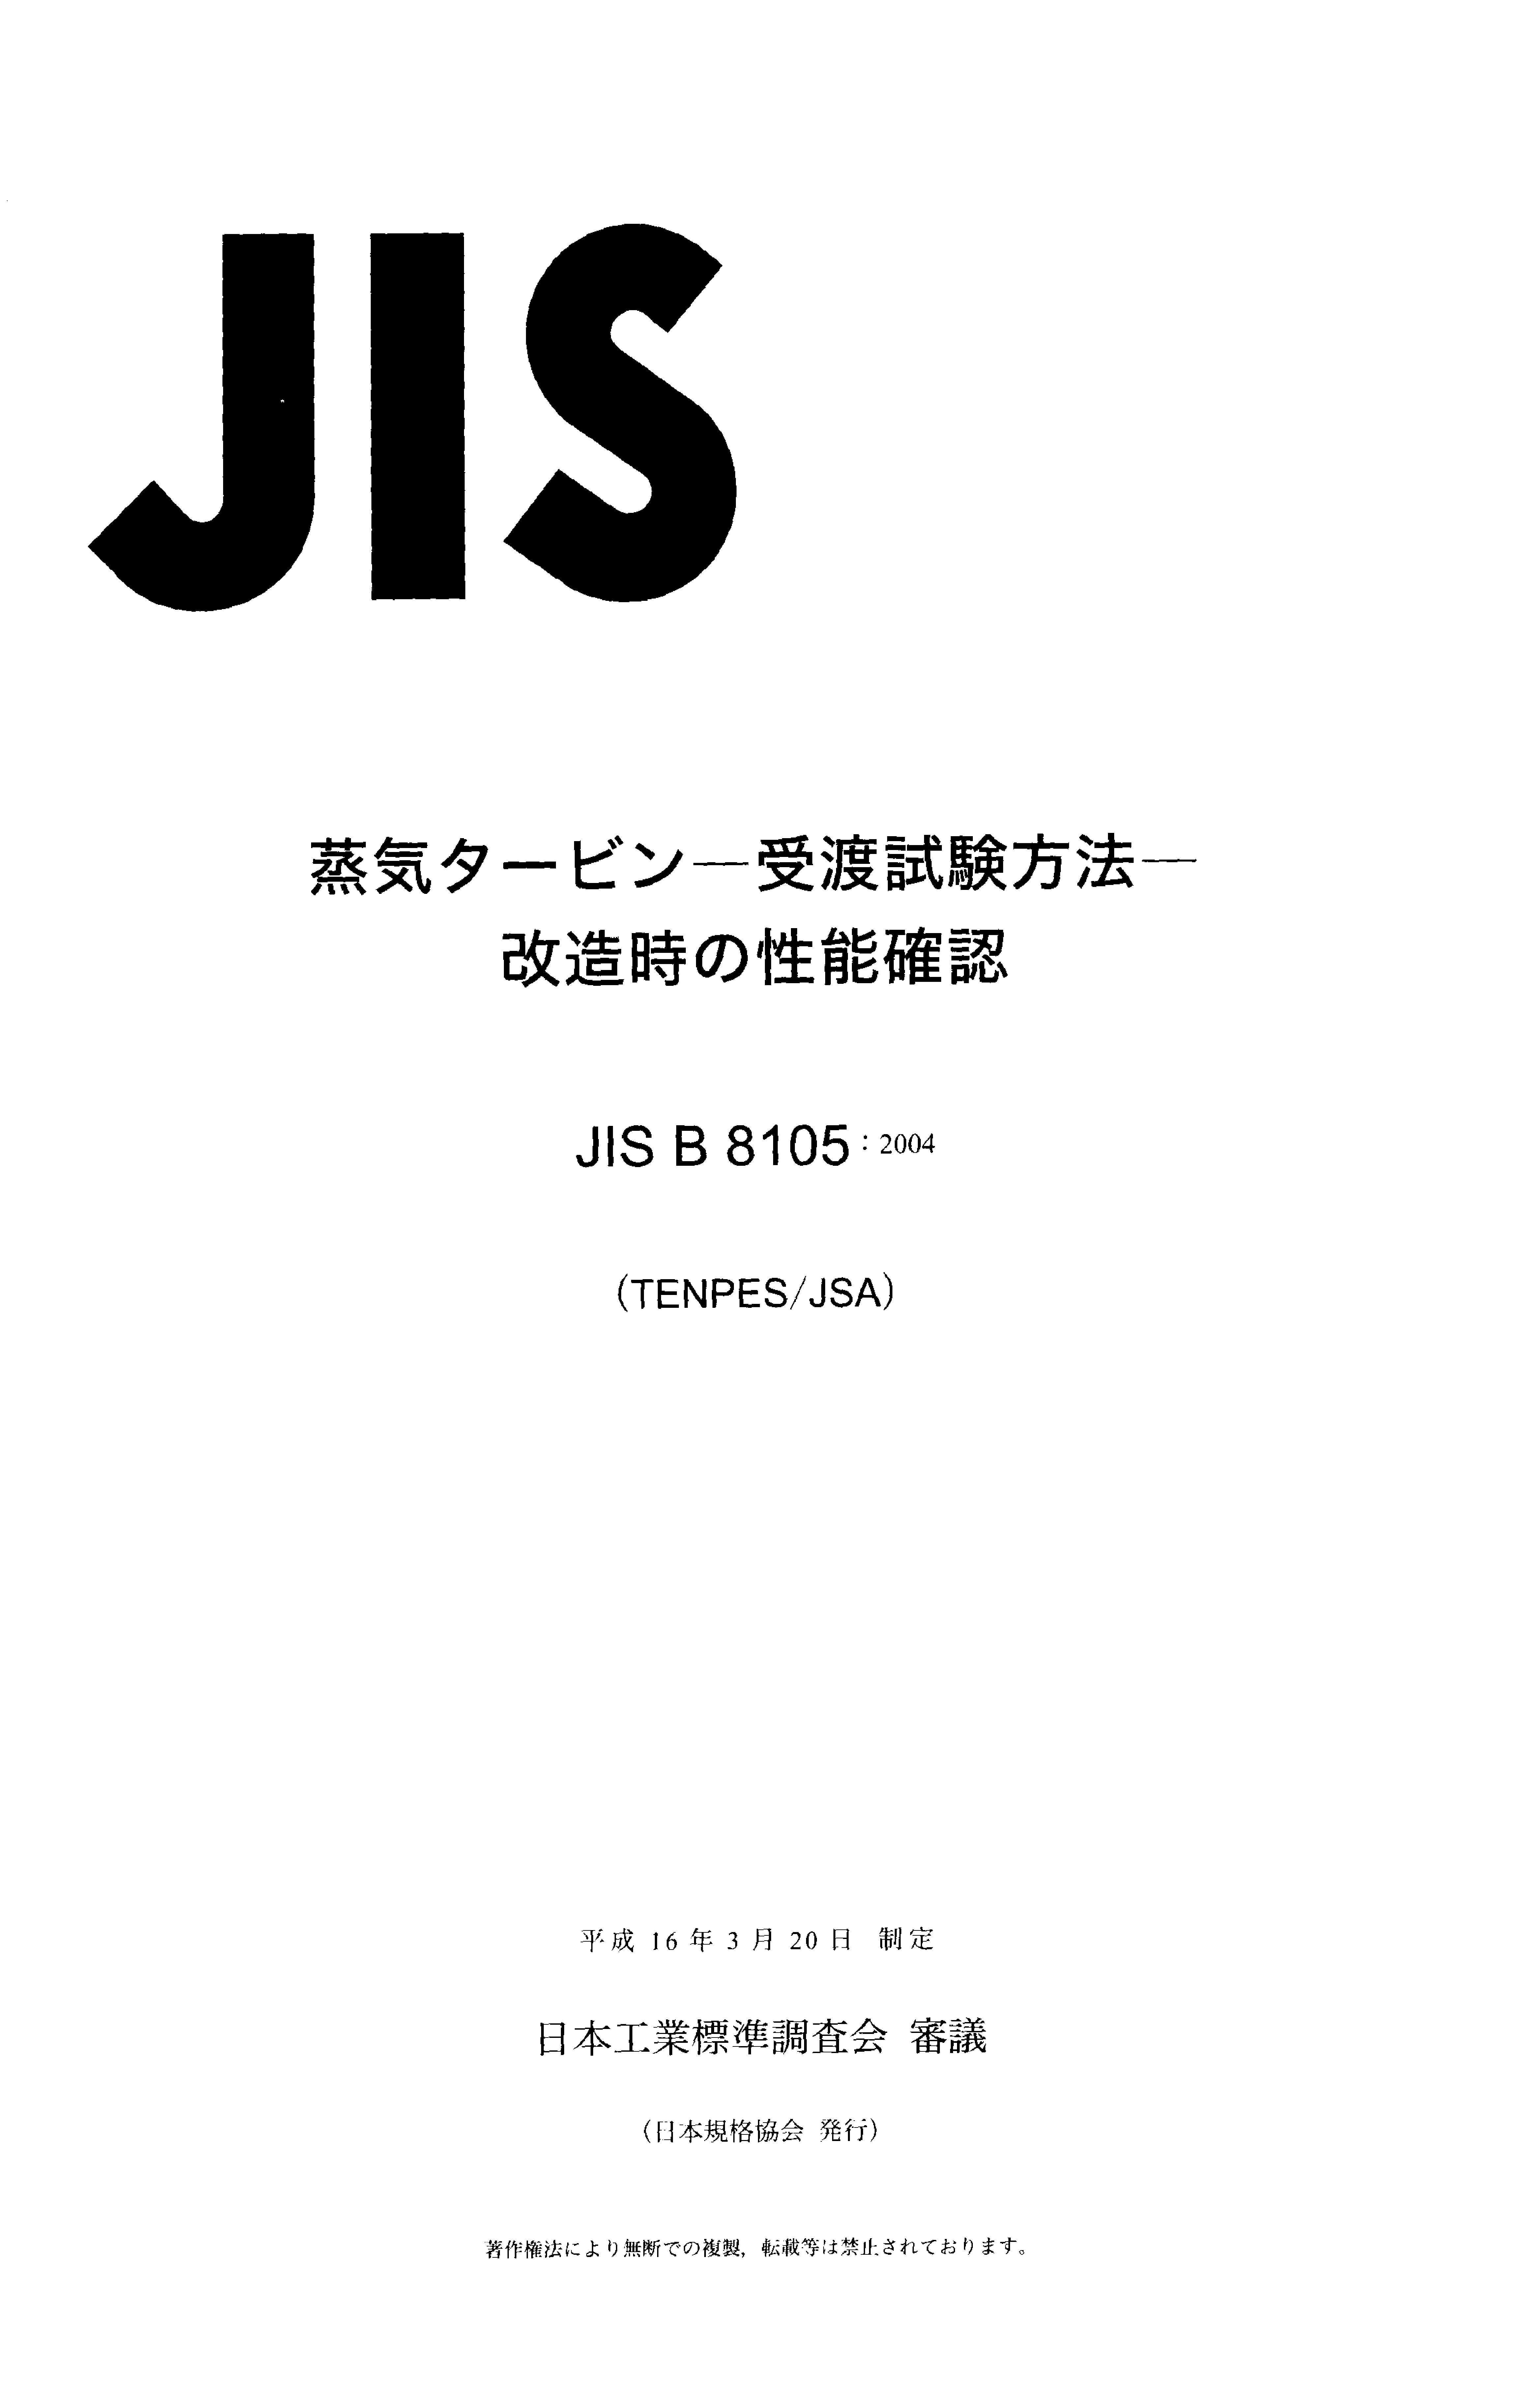 JIS B 8105:2004